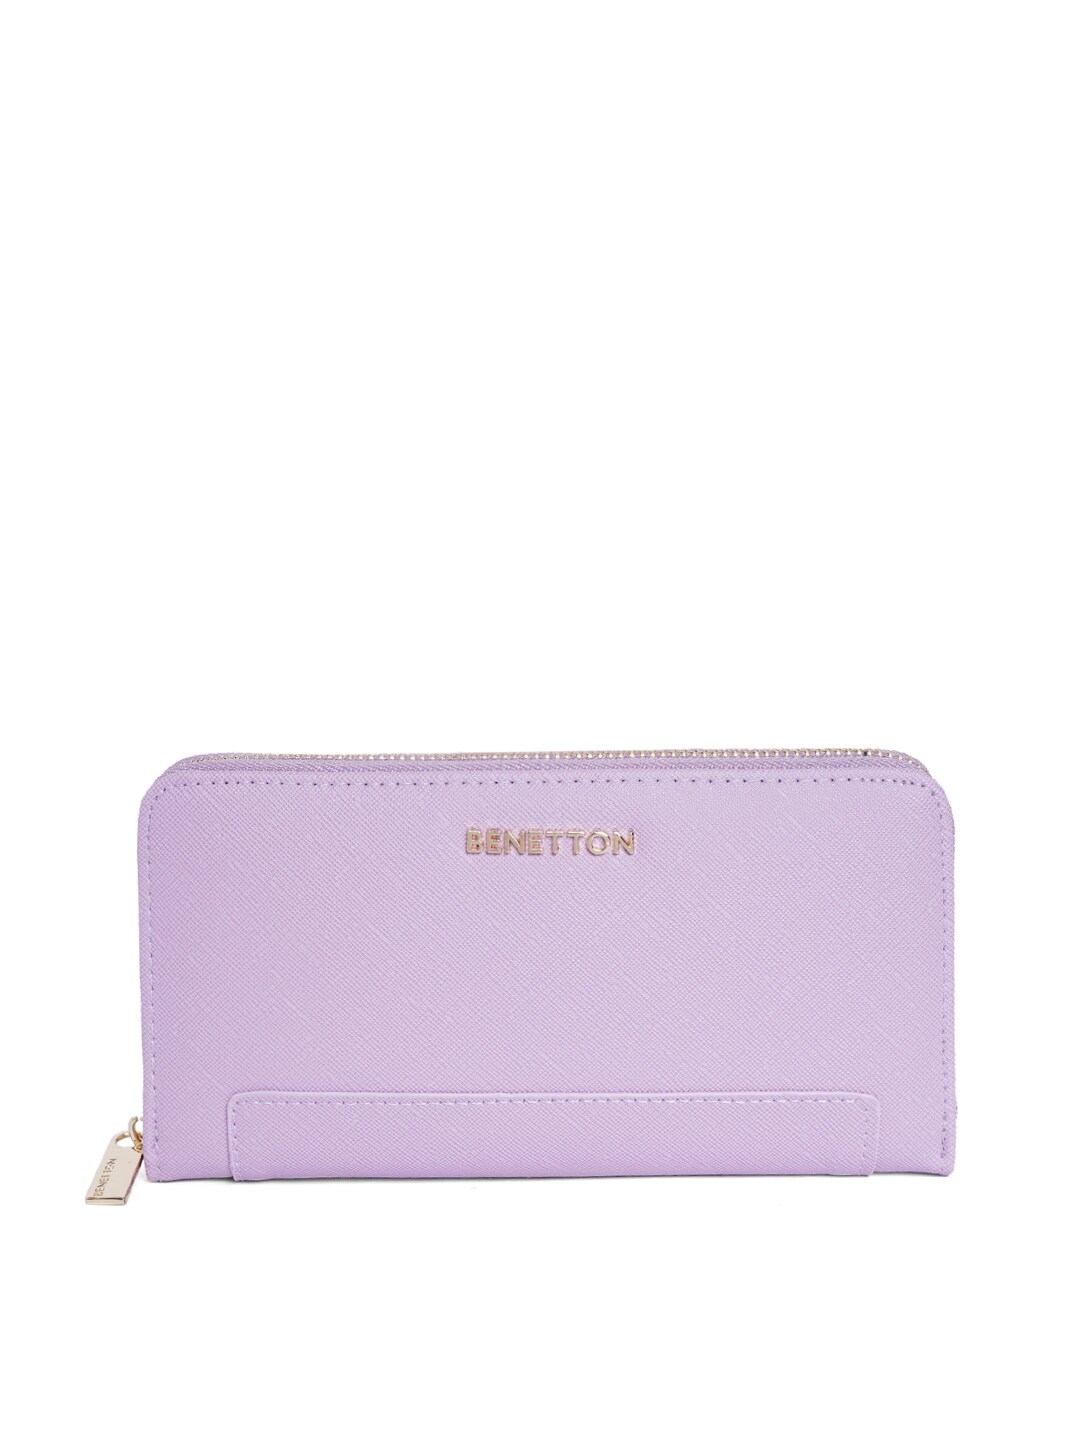 United Colors of Benetton Women Violet Solid Zip Around Wallet Price in India